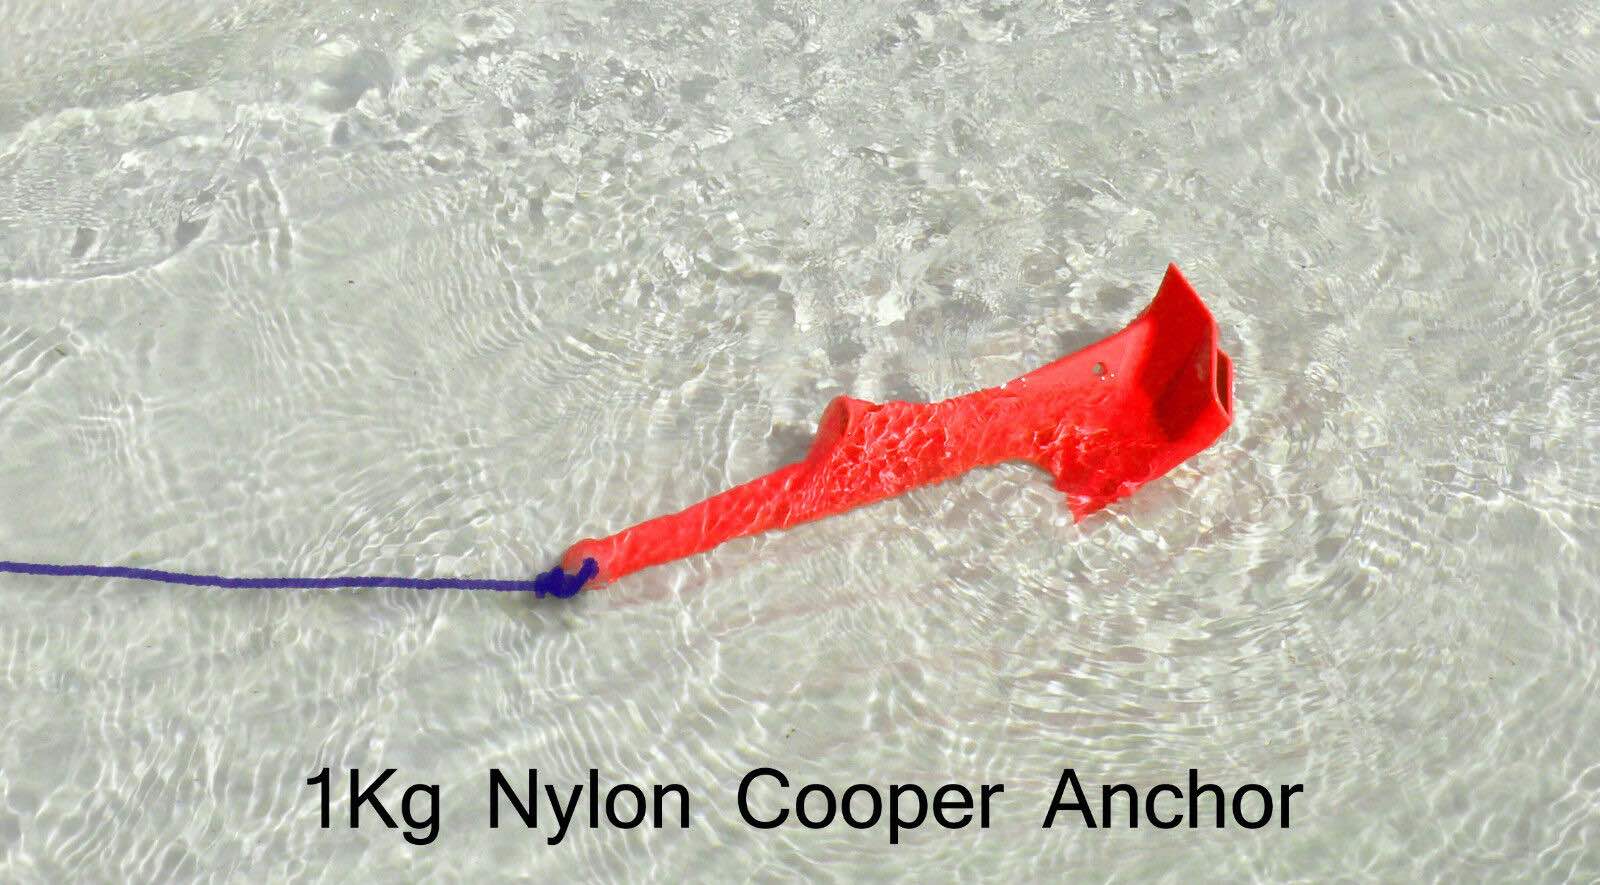 230g nylon cooper anchor in use